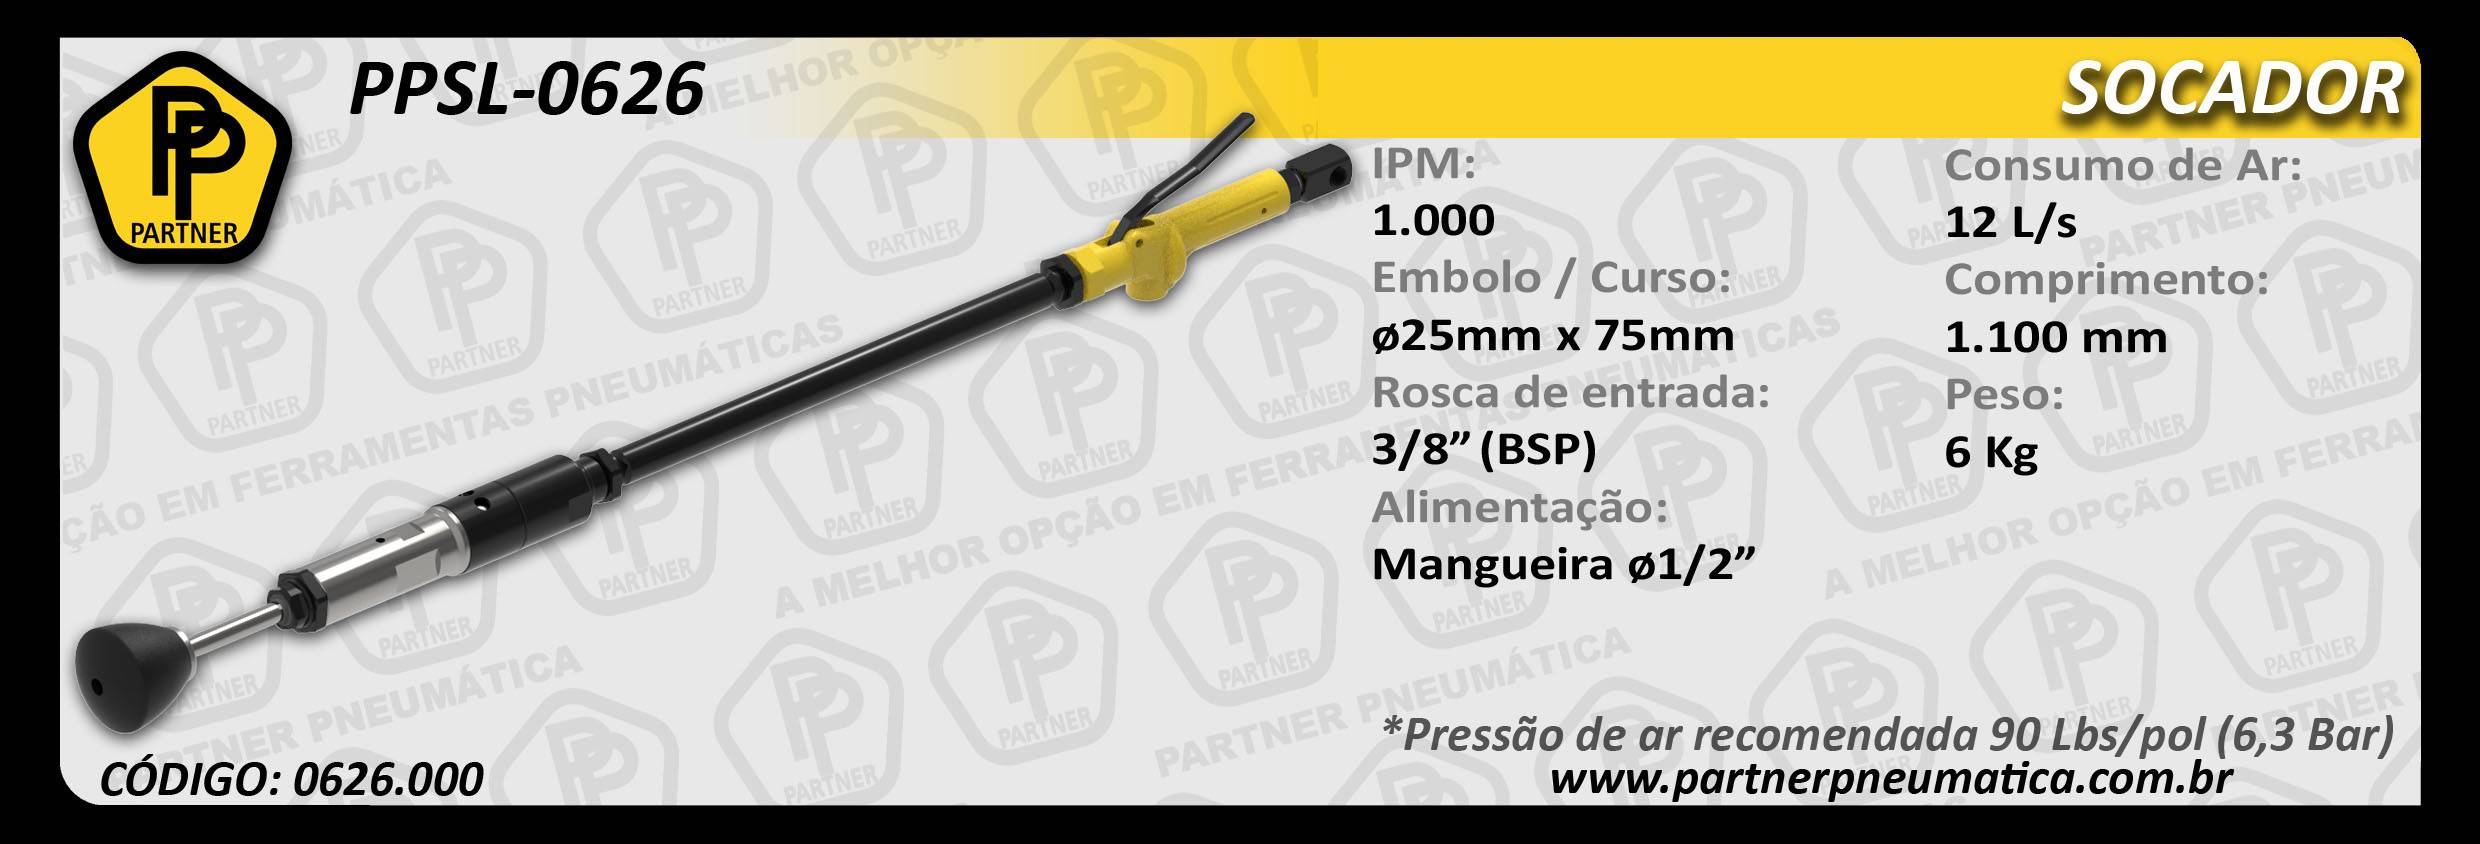 Socador PPSL-0626